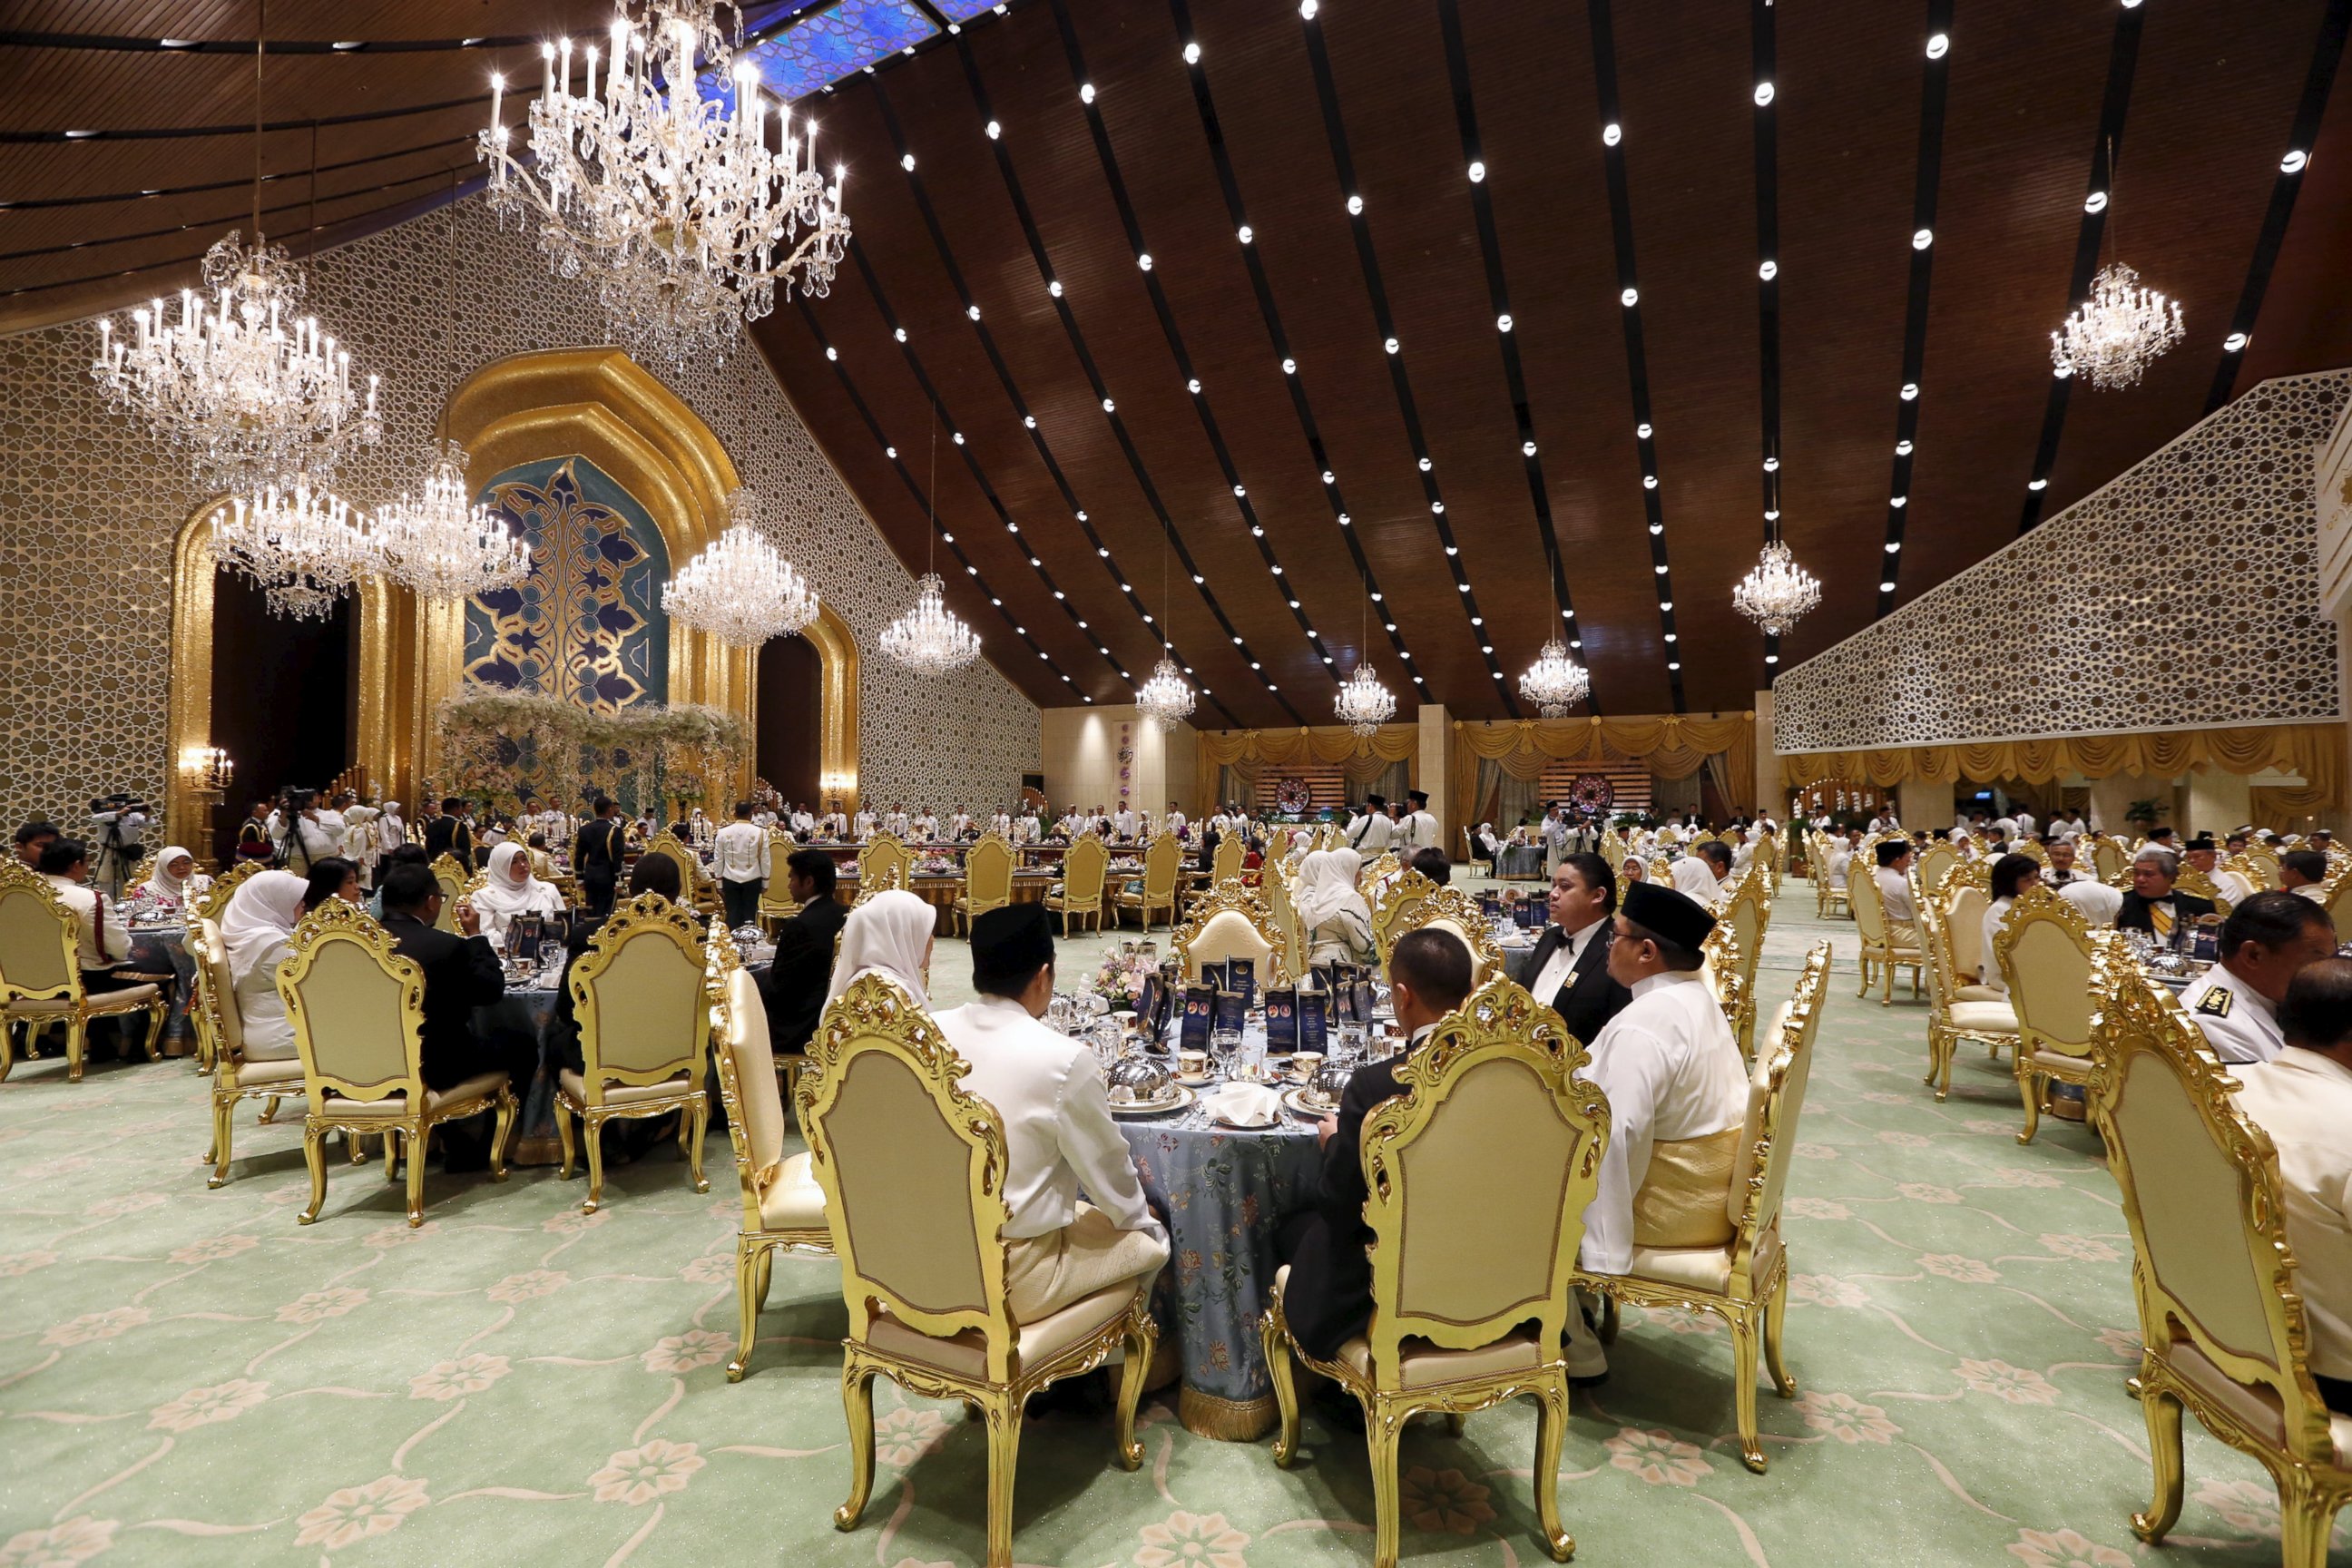 PHOTO: Guests at the wedding banquet for Brunei's newly wed royal couple, Prince Abdul Malik and Dayangku Raabi'atul 'Adawiyyah Pengiran Haji Bolkiah, at the Nurul Iman Palace in Bandar Seri Begawan April 12, 2015.